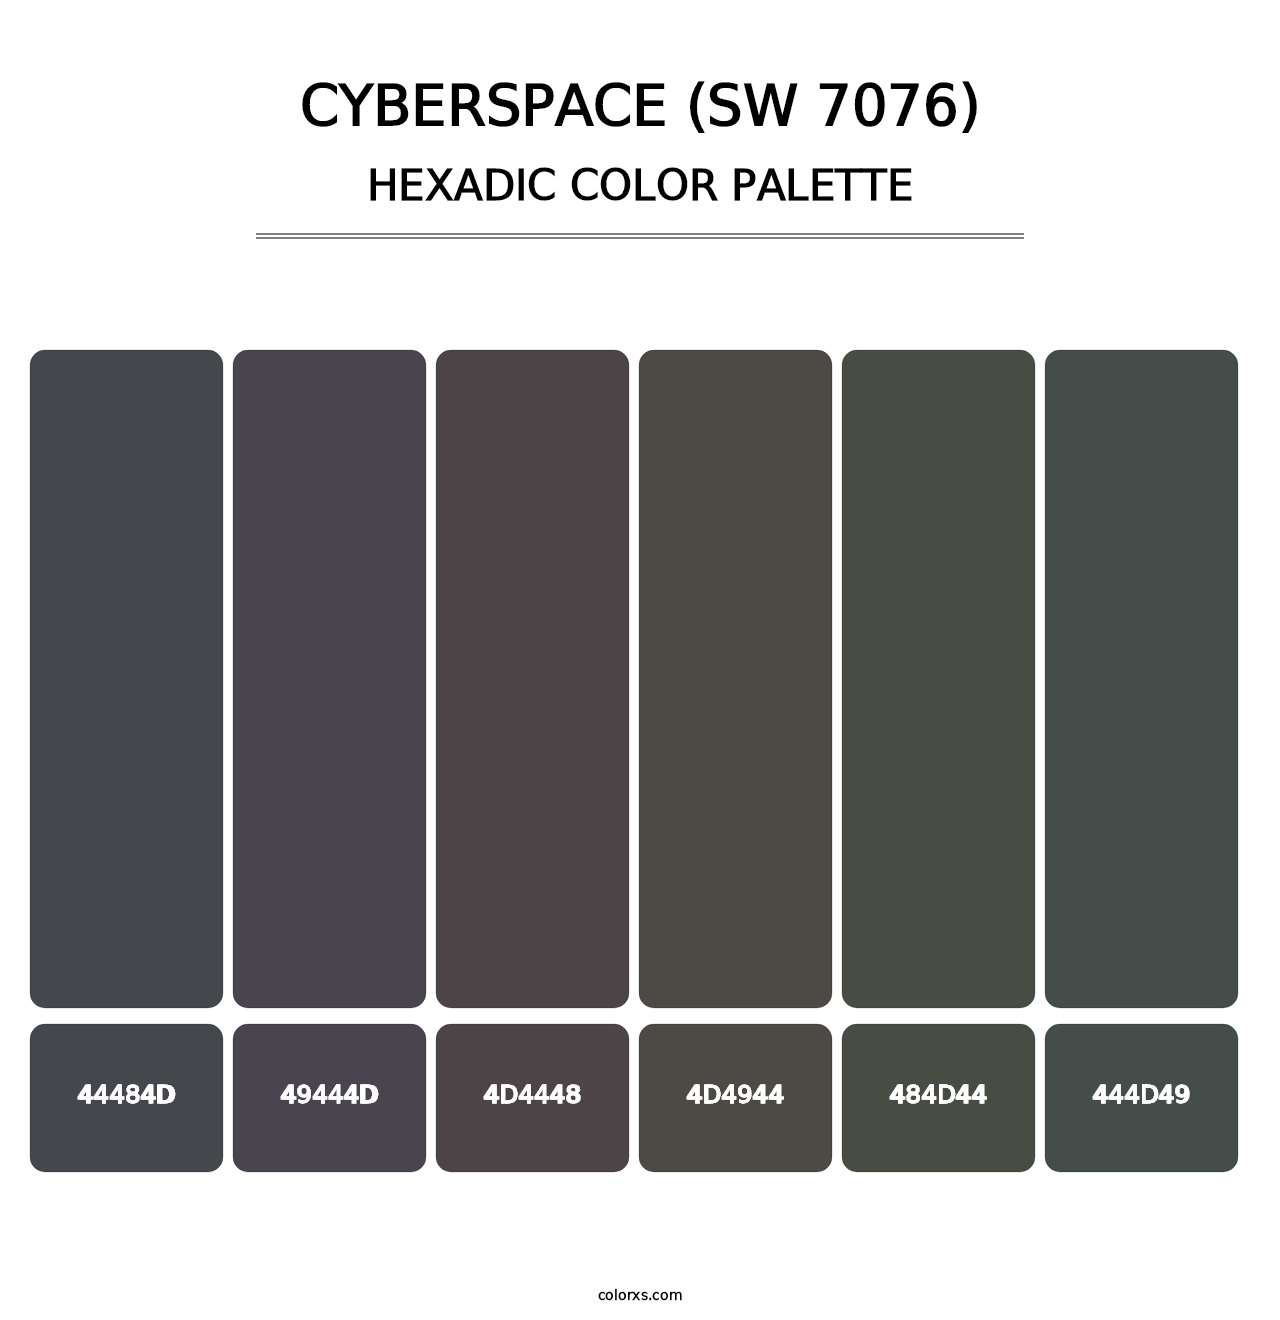 Cyberspace (SW 7076) - Hexadic Color Palette